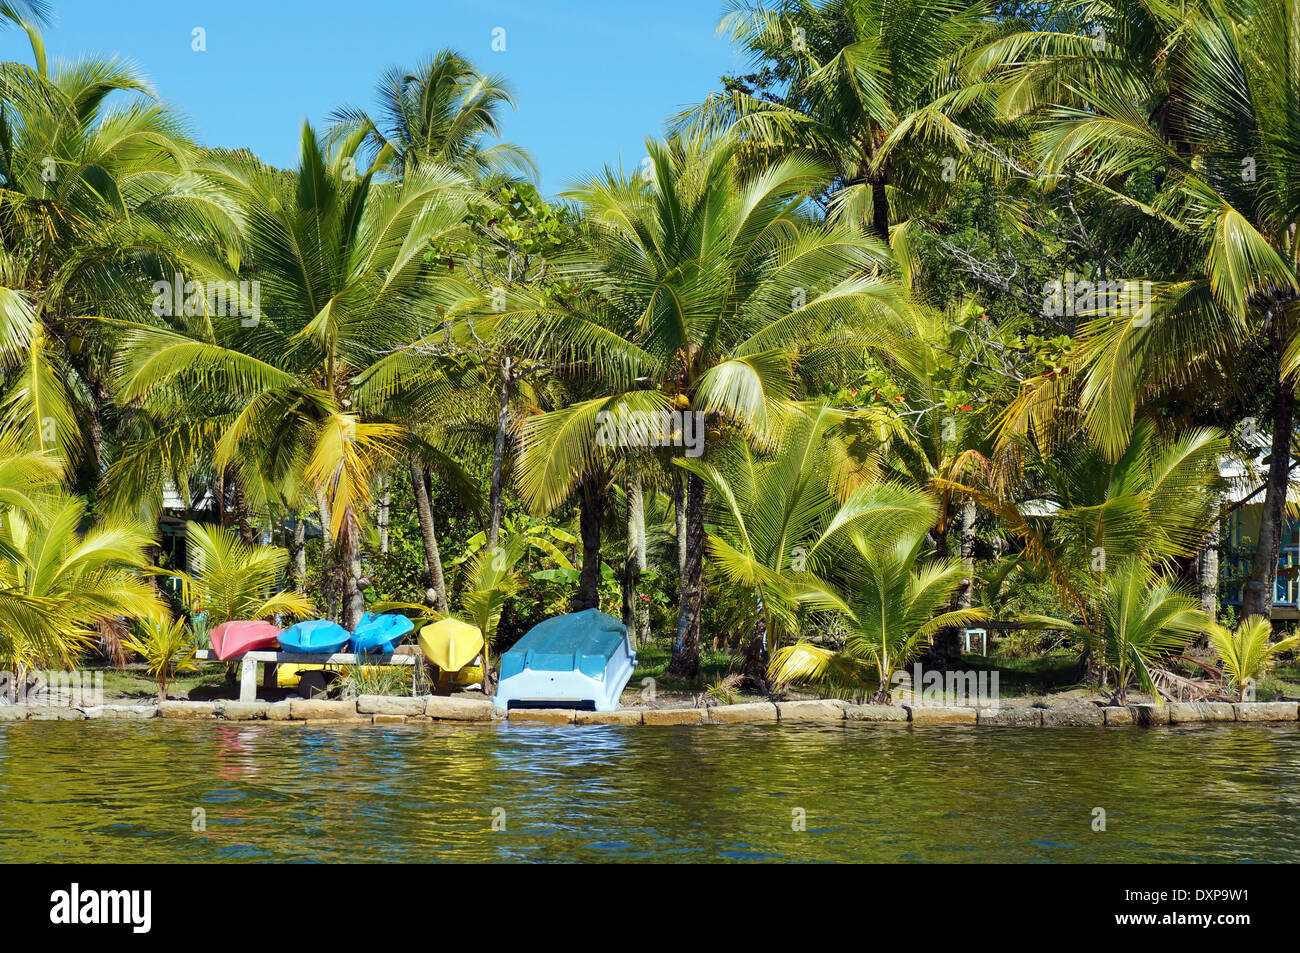 Tropische Küste mit Kokosnuss-Palmen und bunten Kajaks wartet auf Touristen, Carenero Karibikinsel, Bocas del Toro, Panama Stockfoto